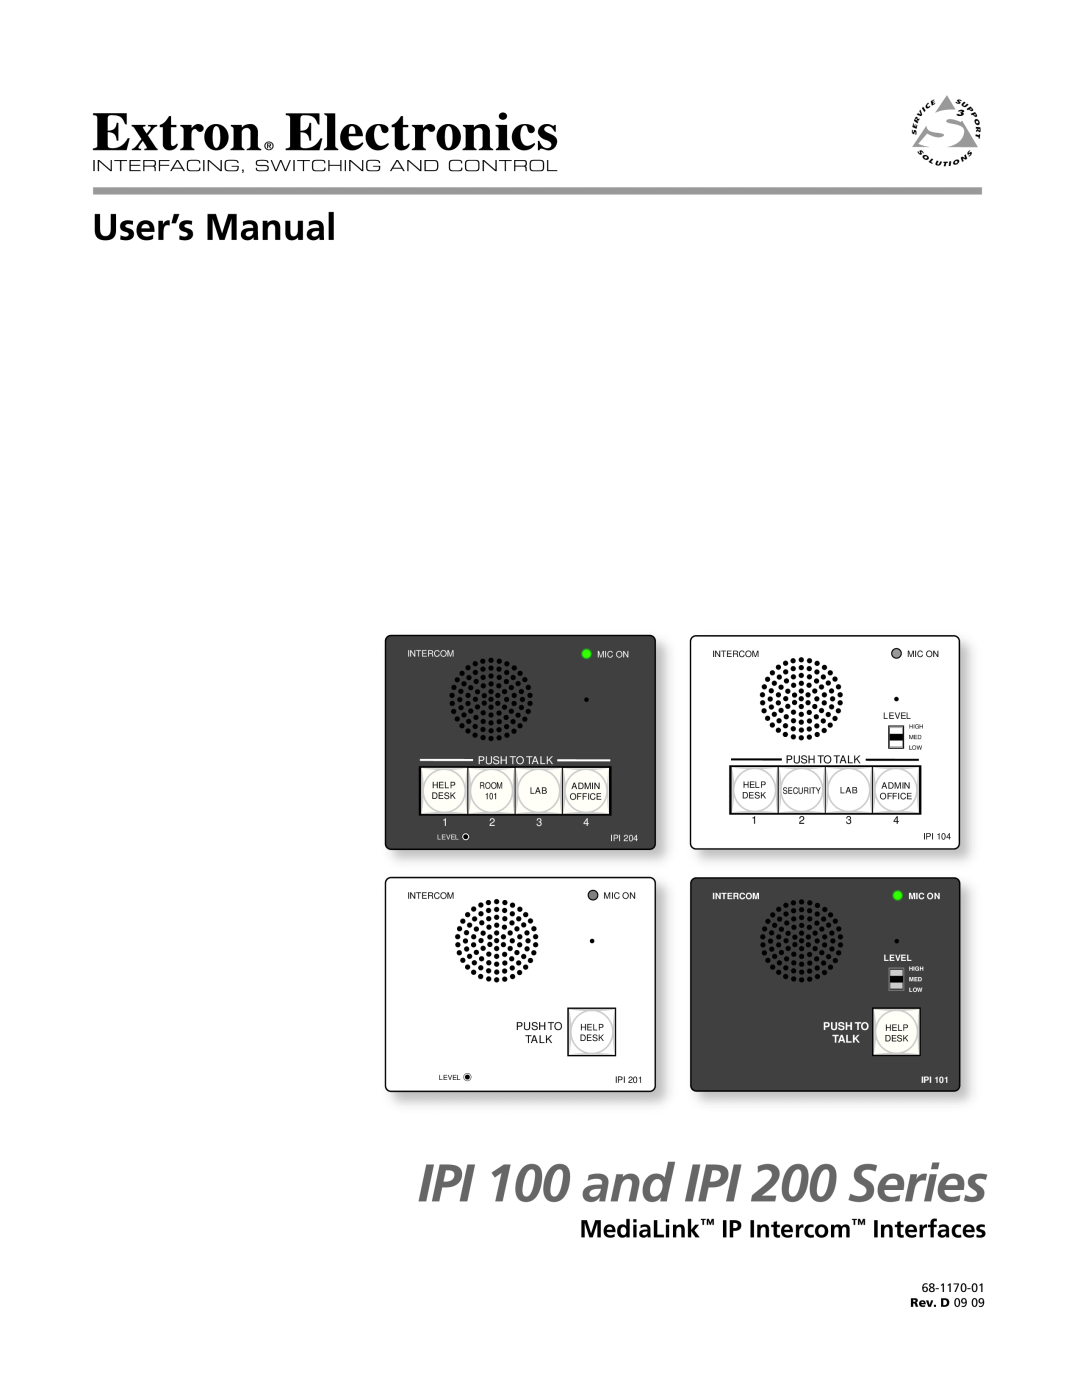 Extron electronic manual MediaLink IP Intercom Interfaces, IPI 100 and IPI 200 Series, 68-1170-01 Rev. D 09, Push To 